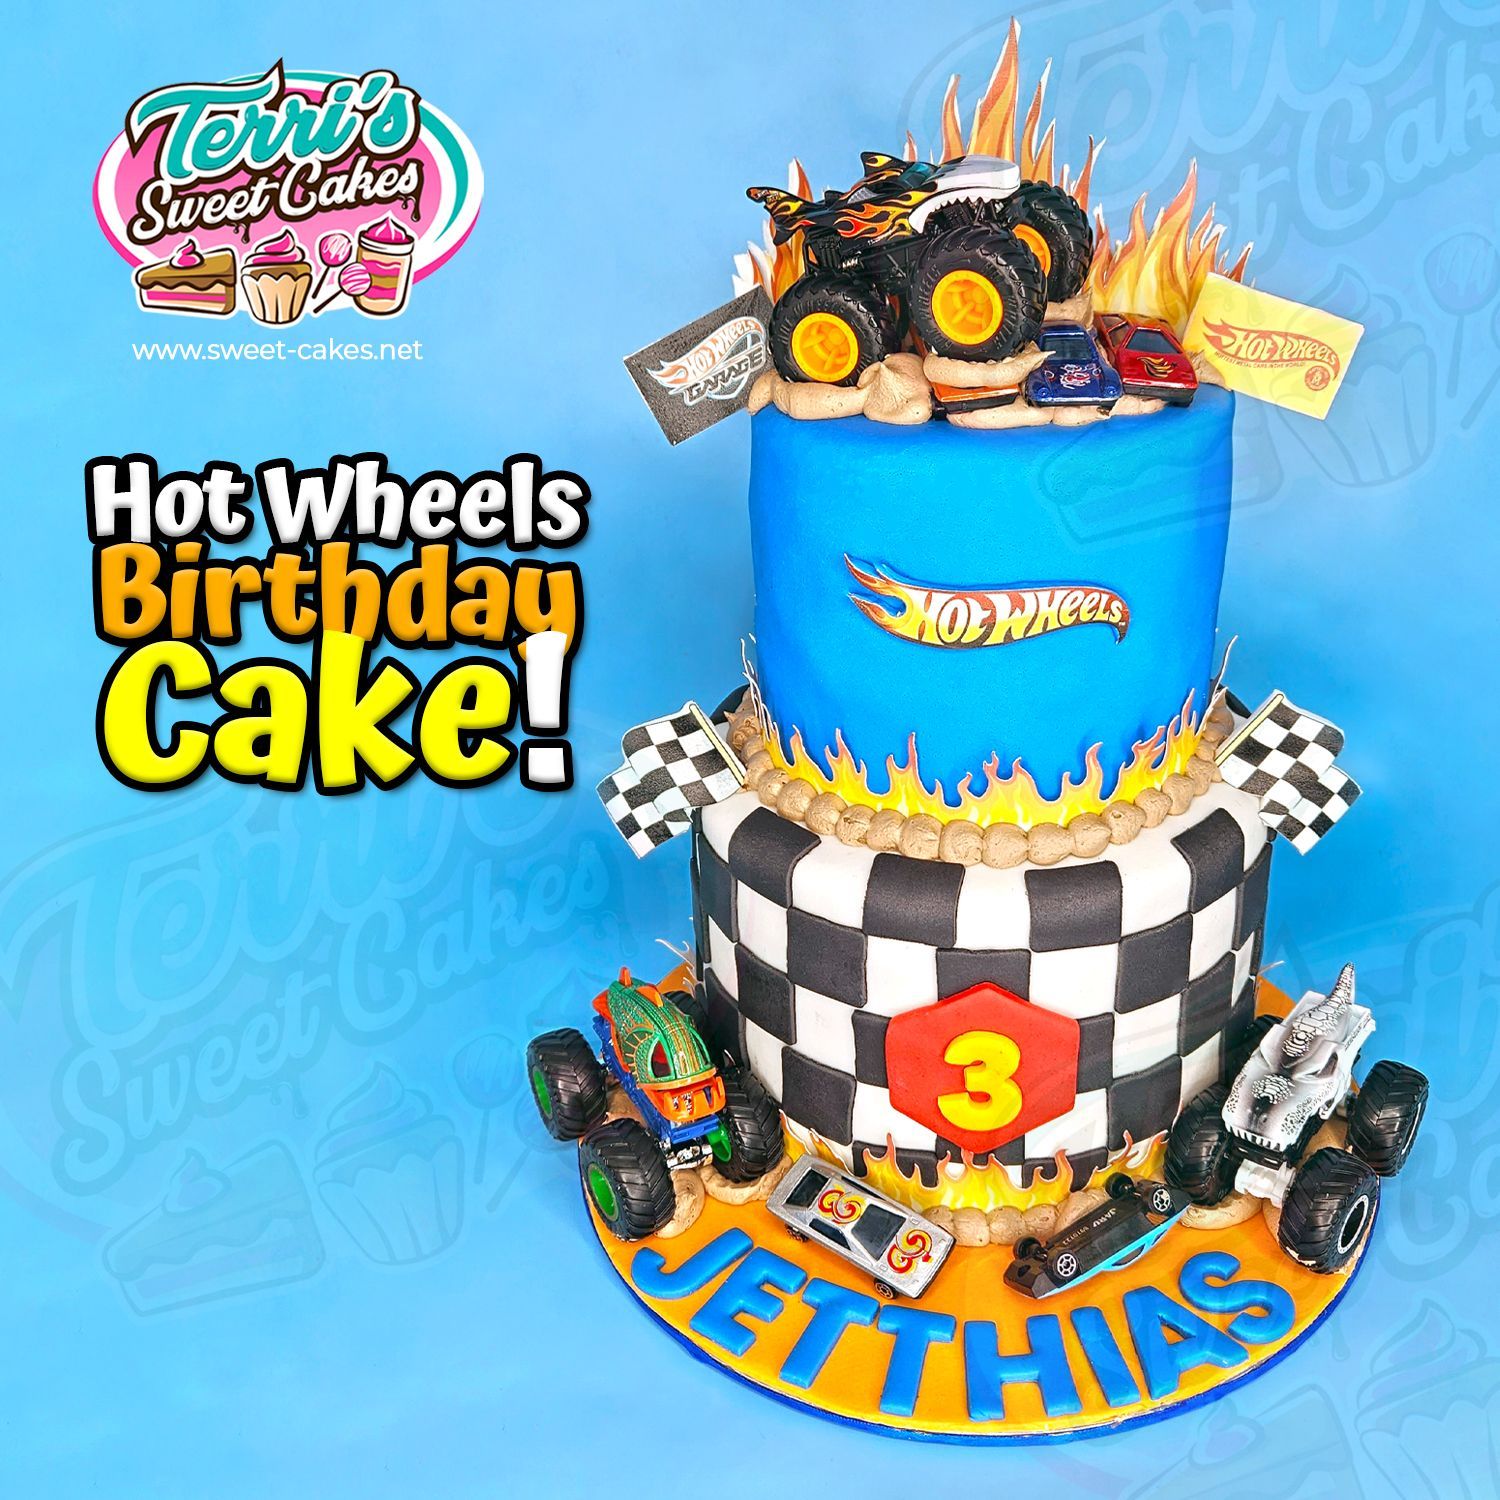 Custom Hot Wheels Birthday Cake by Terri's Sweet Cakes